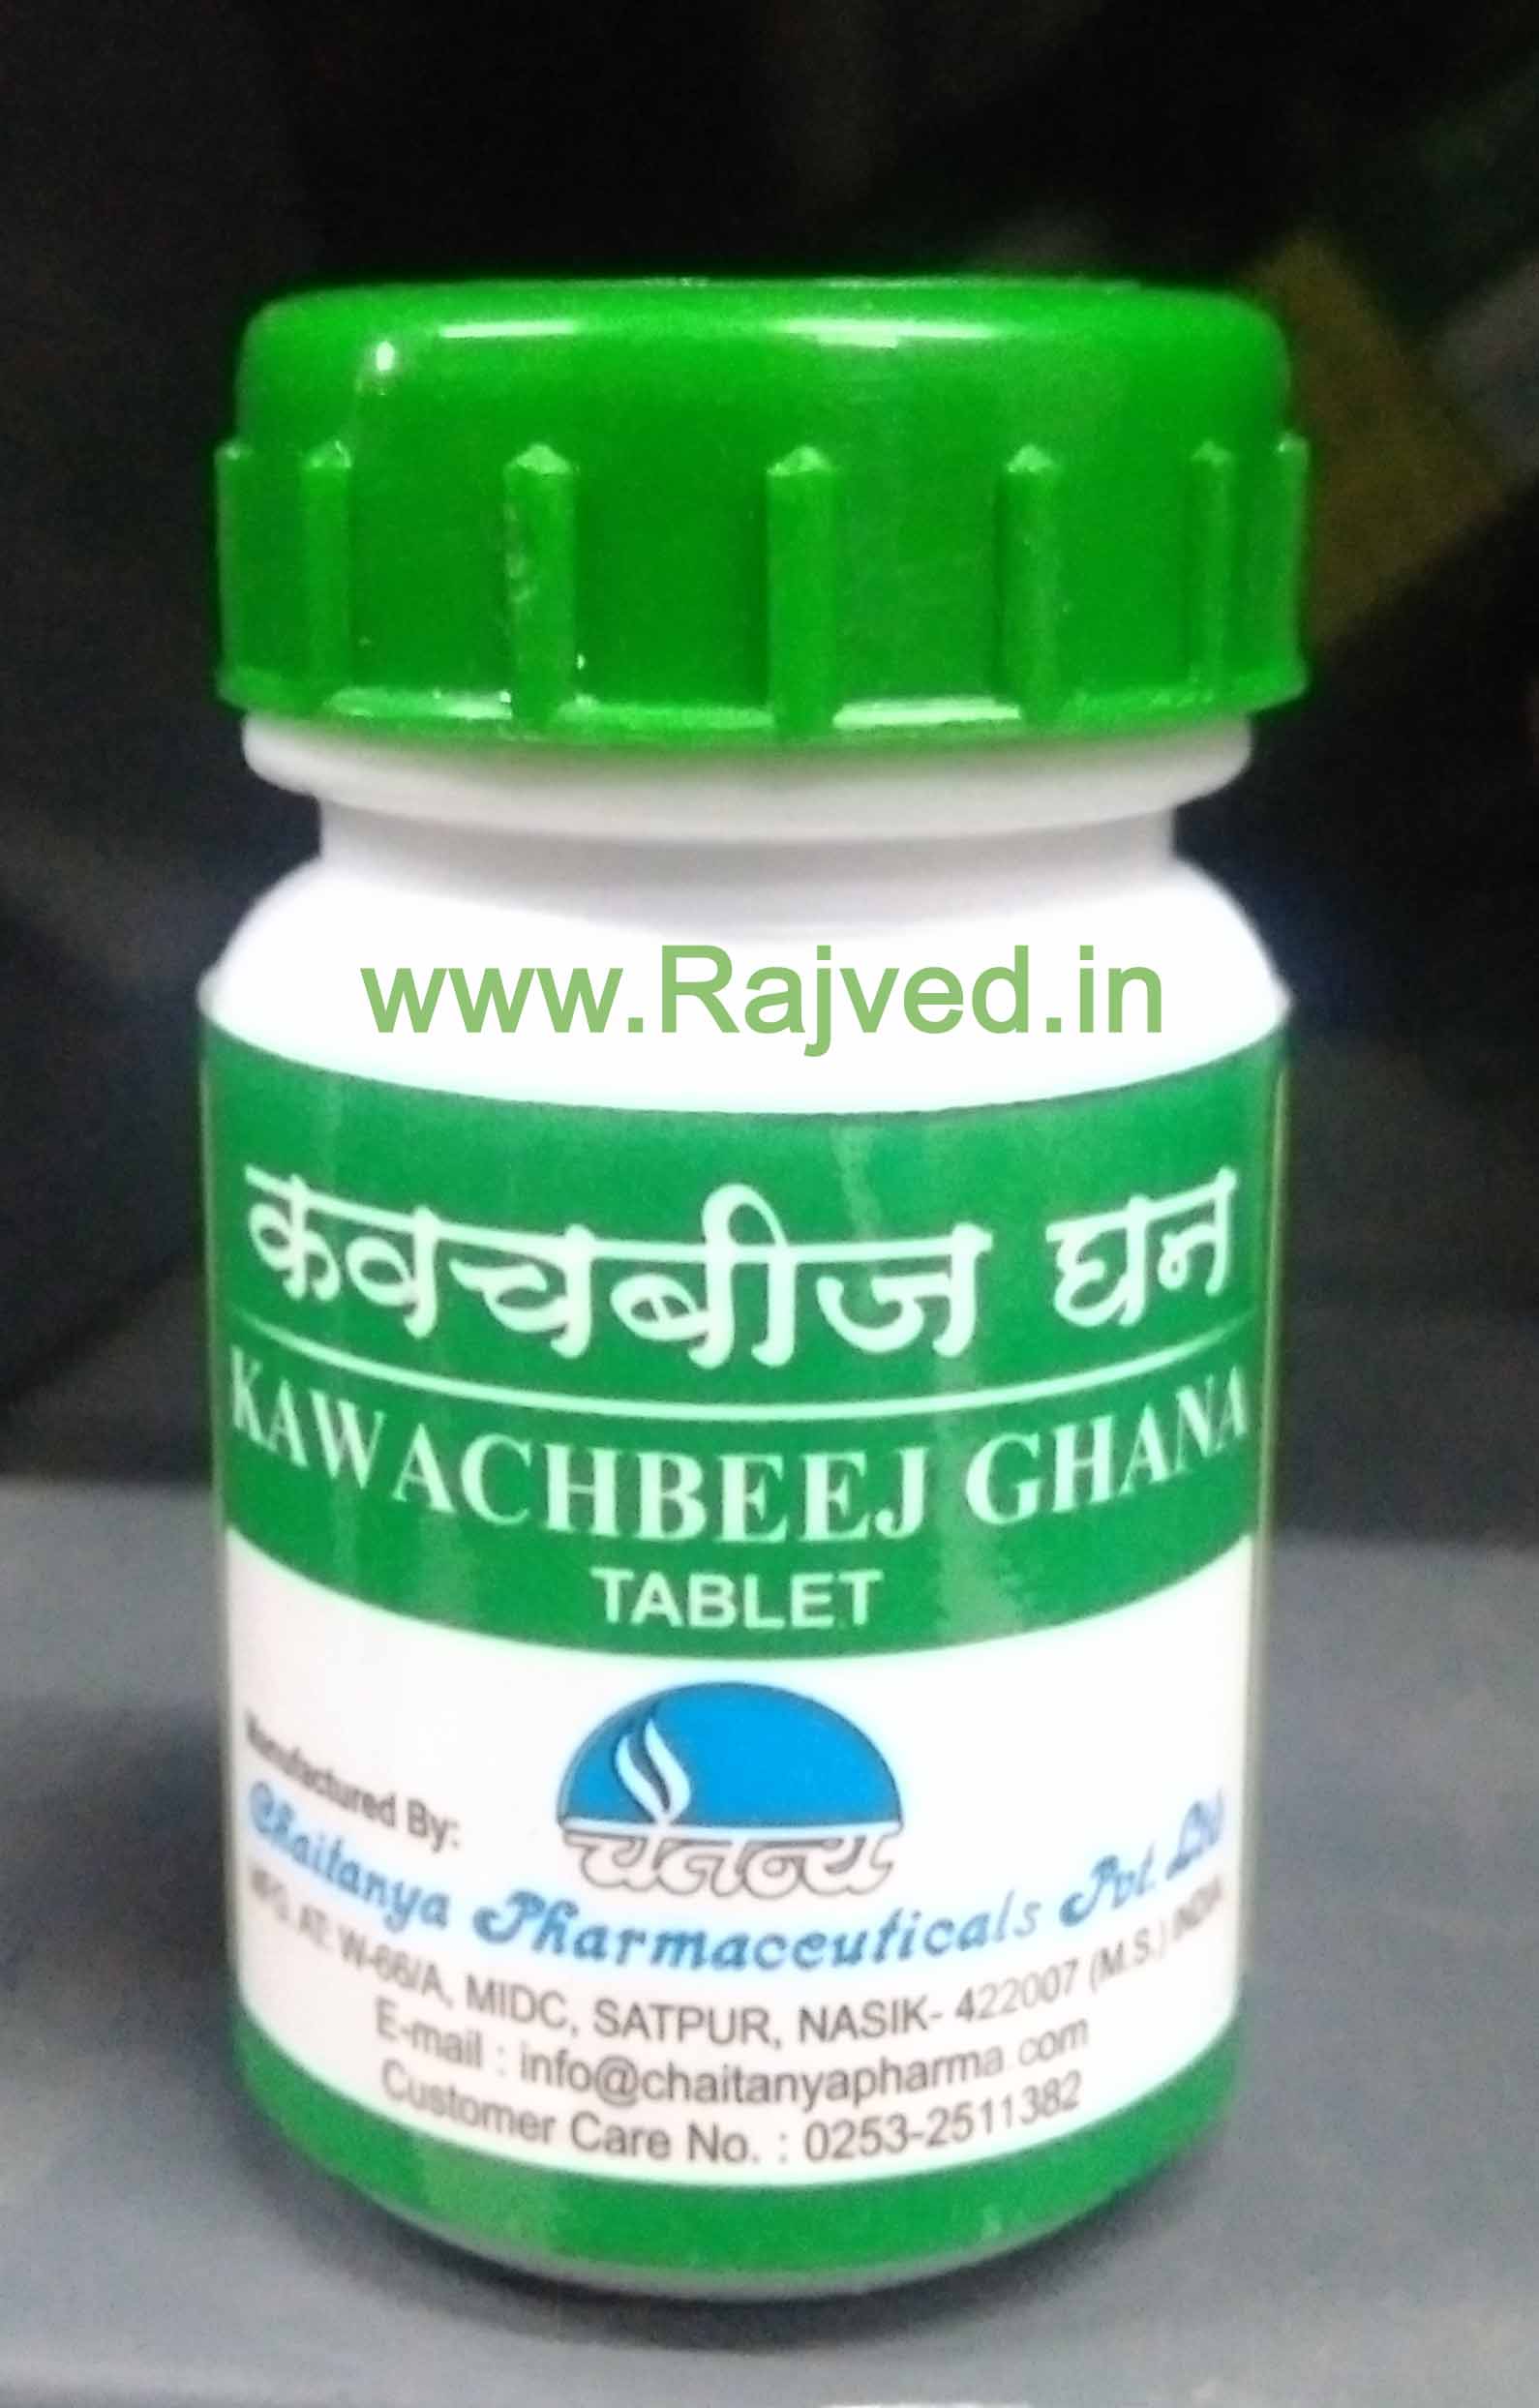 kawachbeej ghana 500tab upto 20% off free shipping chaitanya pharmaceuticals